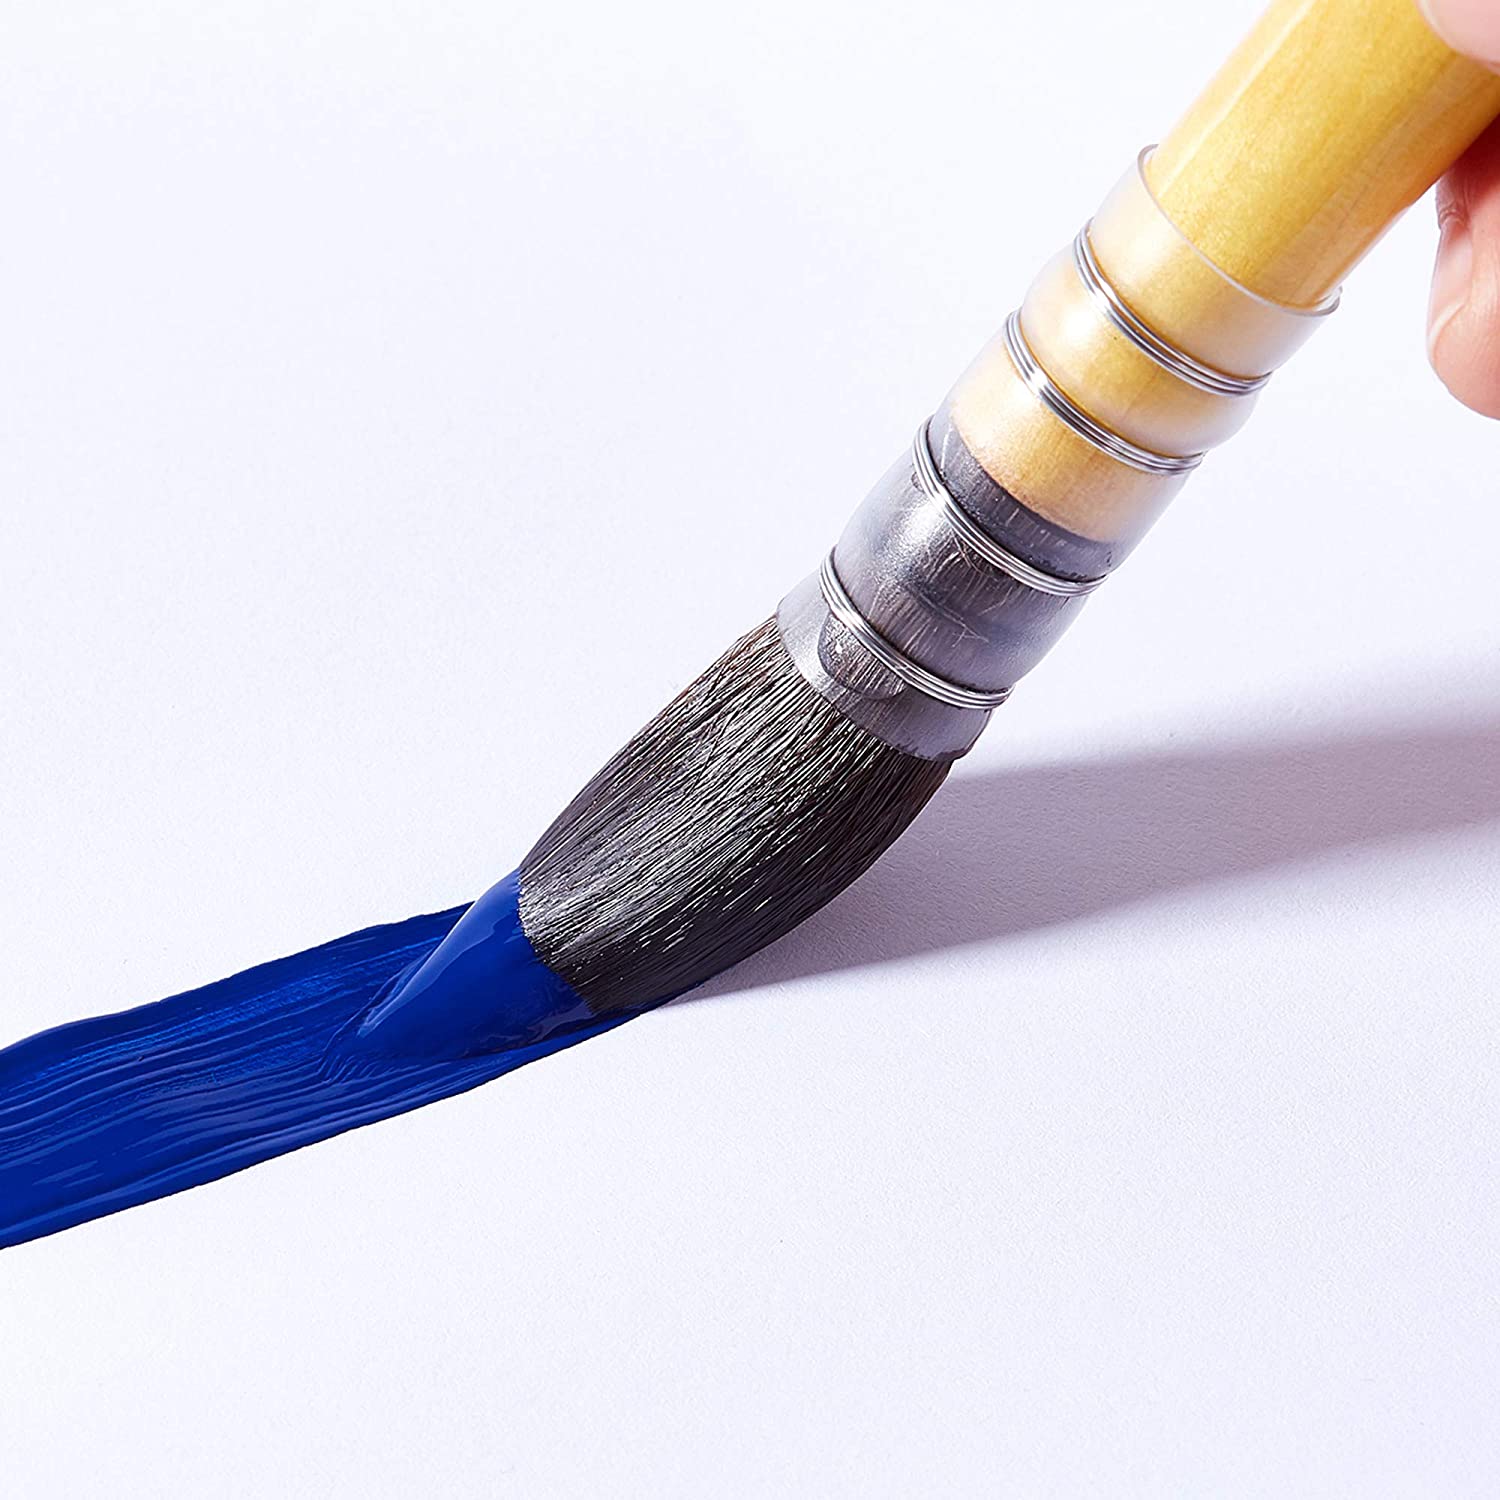 OOKU Premium Watercolor Brush Pens - 20 Colors Watercolor Pens | Real Brush  Tip - Consistent Flow & Smooth Blend | Nylon Refillable Water Based